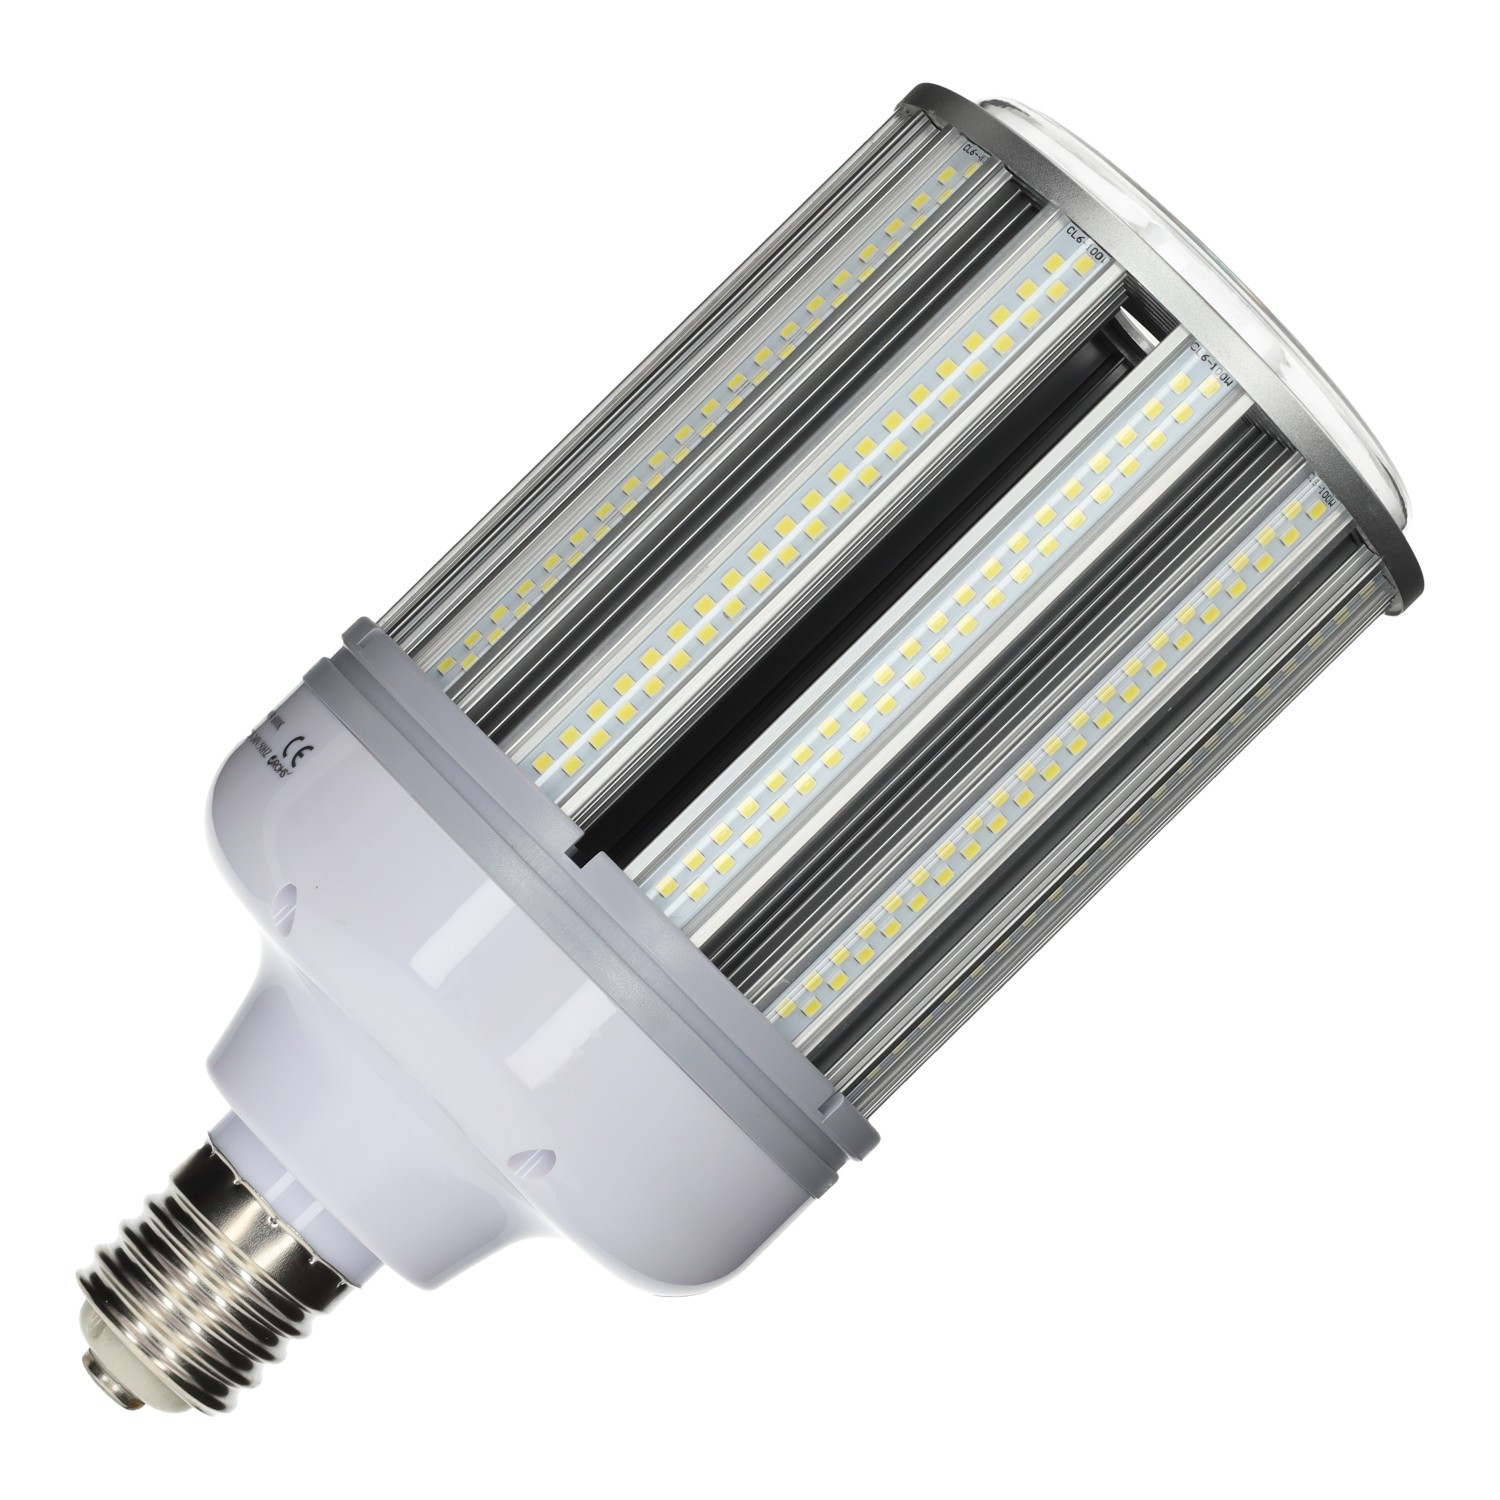 LED Corn Lamp for Public Lighting - Professional Series, 100W